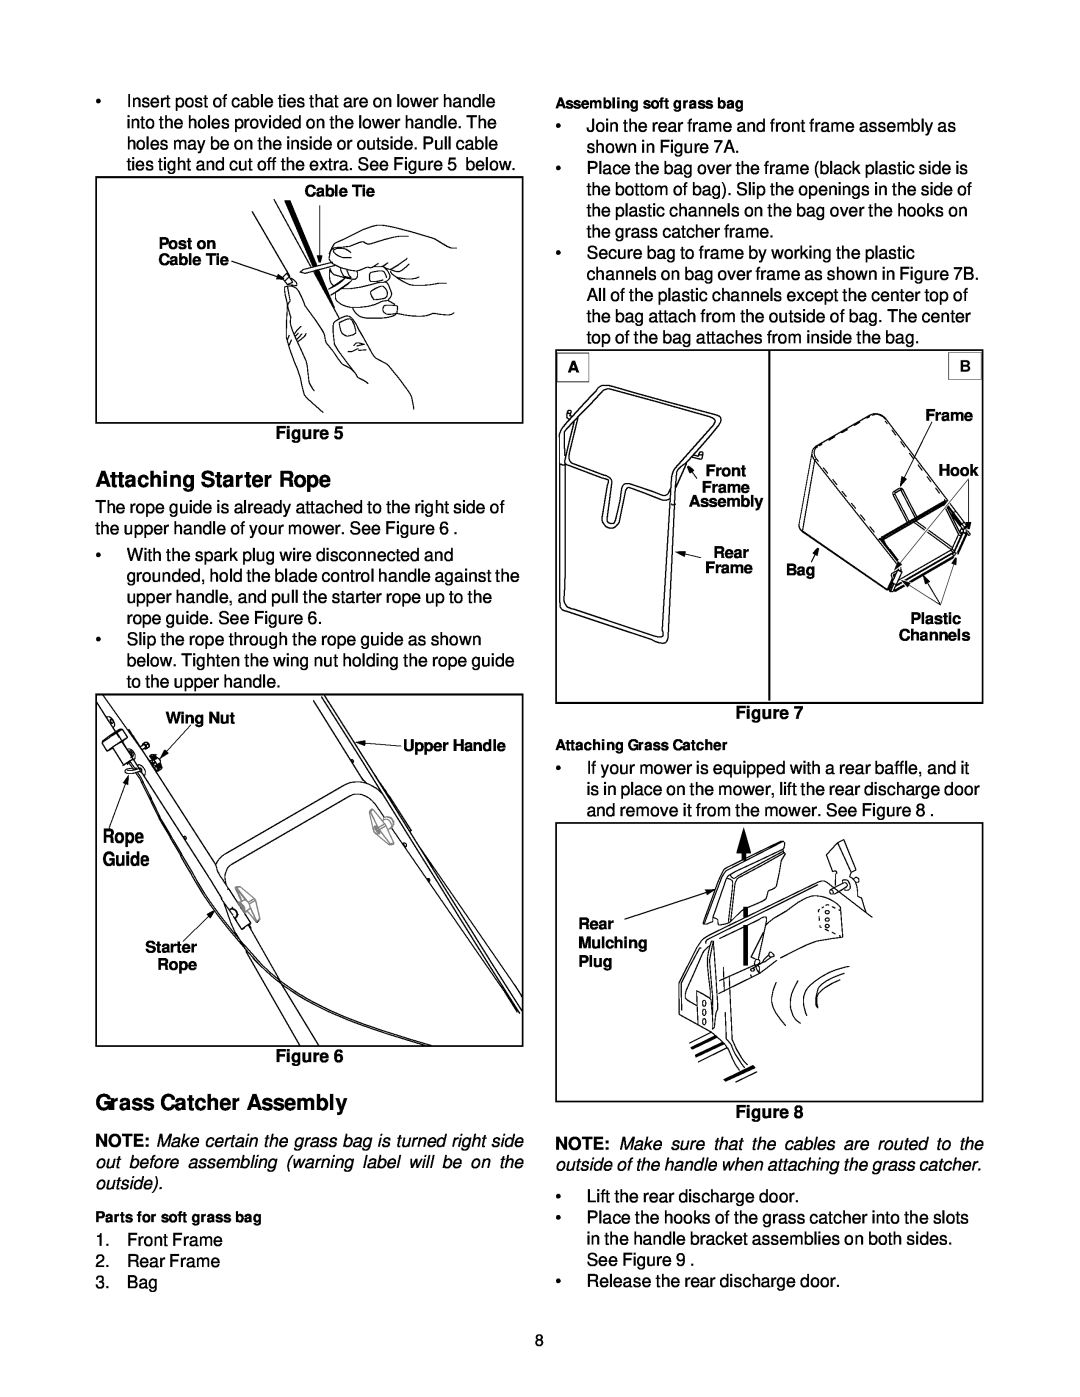 MTD 469 manual Attaching Starter Rope, Grass Catcher Assembly, Parts for soft grass bag, Assembling soft grass bag, Guide 